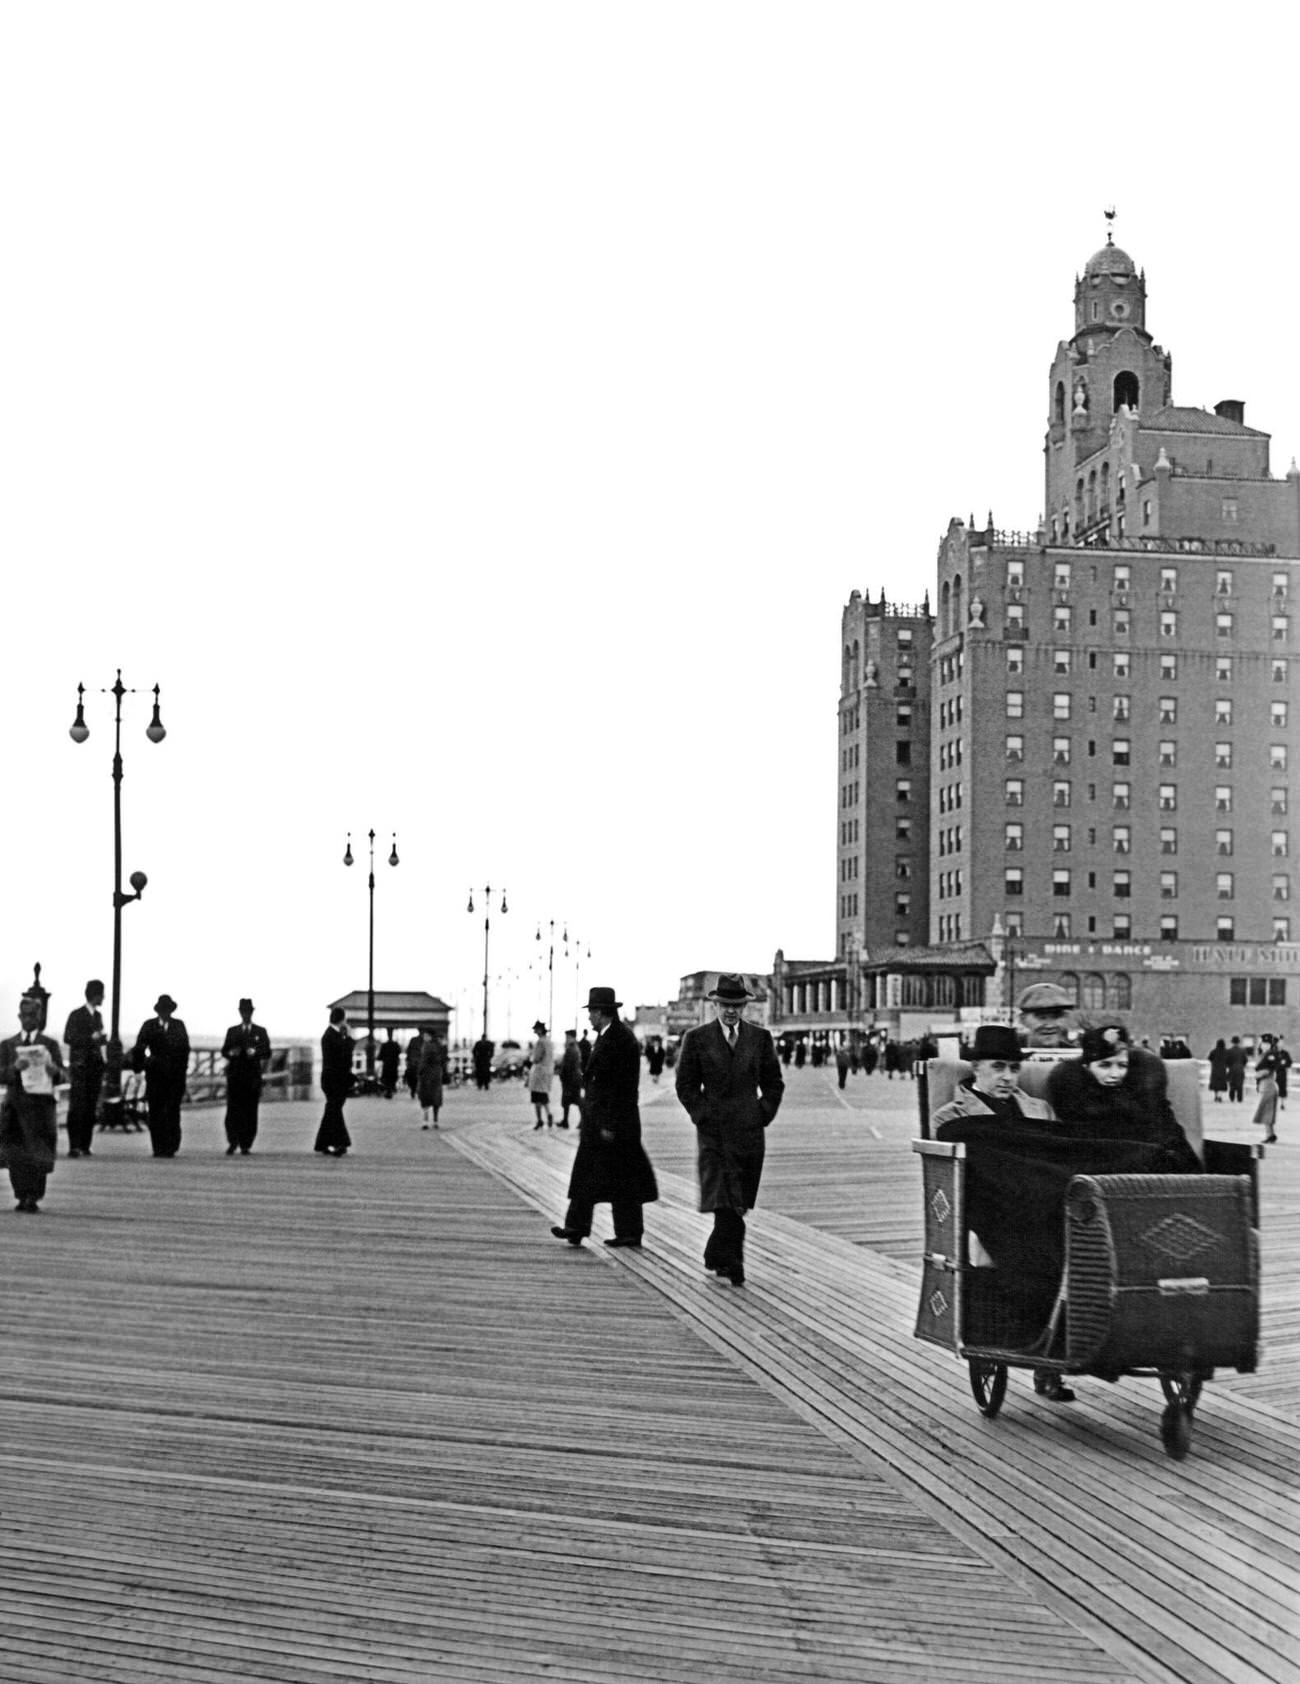 People Promenade On Coney Island Boardwalk, April 24, 1938